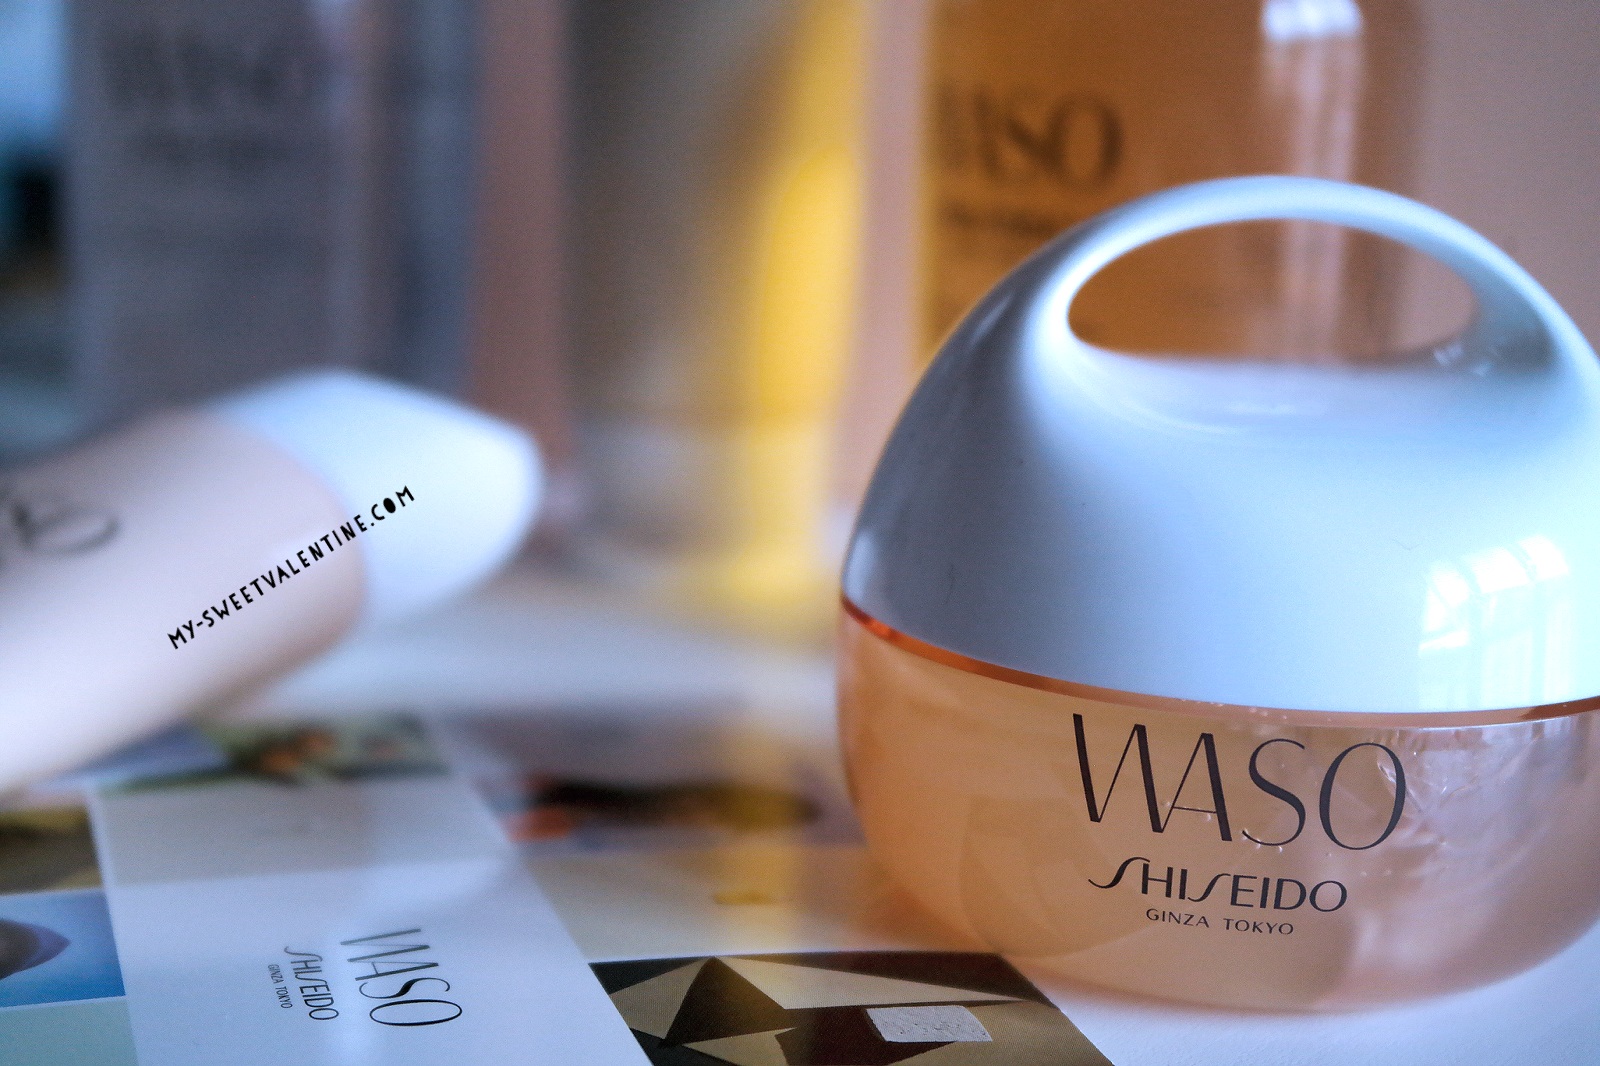 Shiseido ginza купить. Шисейдо косметика. Waso Shiseido флюид. Кофе шисейдо. Waso Shiseido логотип.